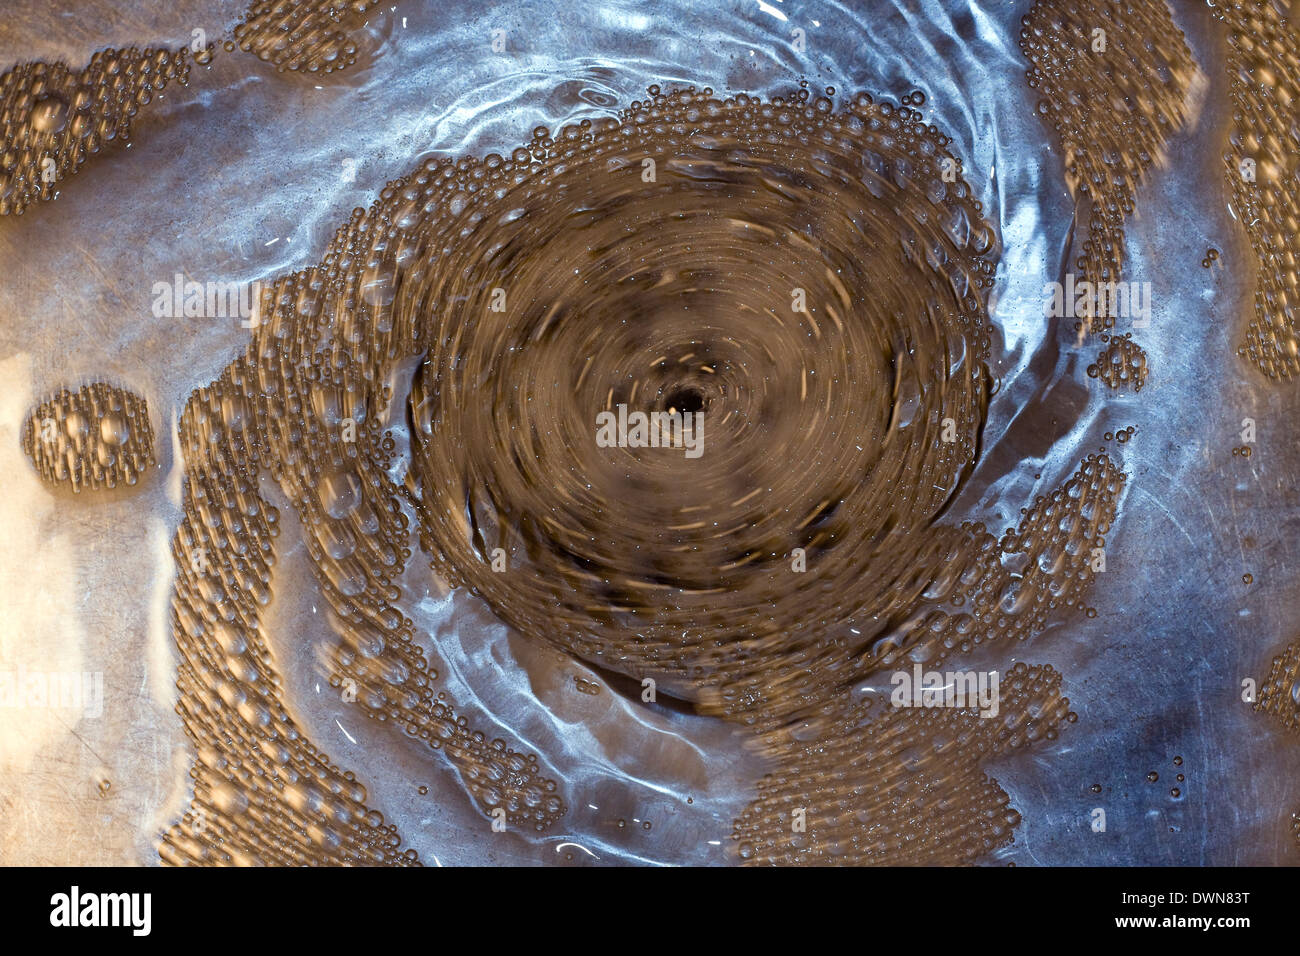 Motion Blur of bubbles spiraling in a gradually tightening circular vortex down a sink drain Stock Photo